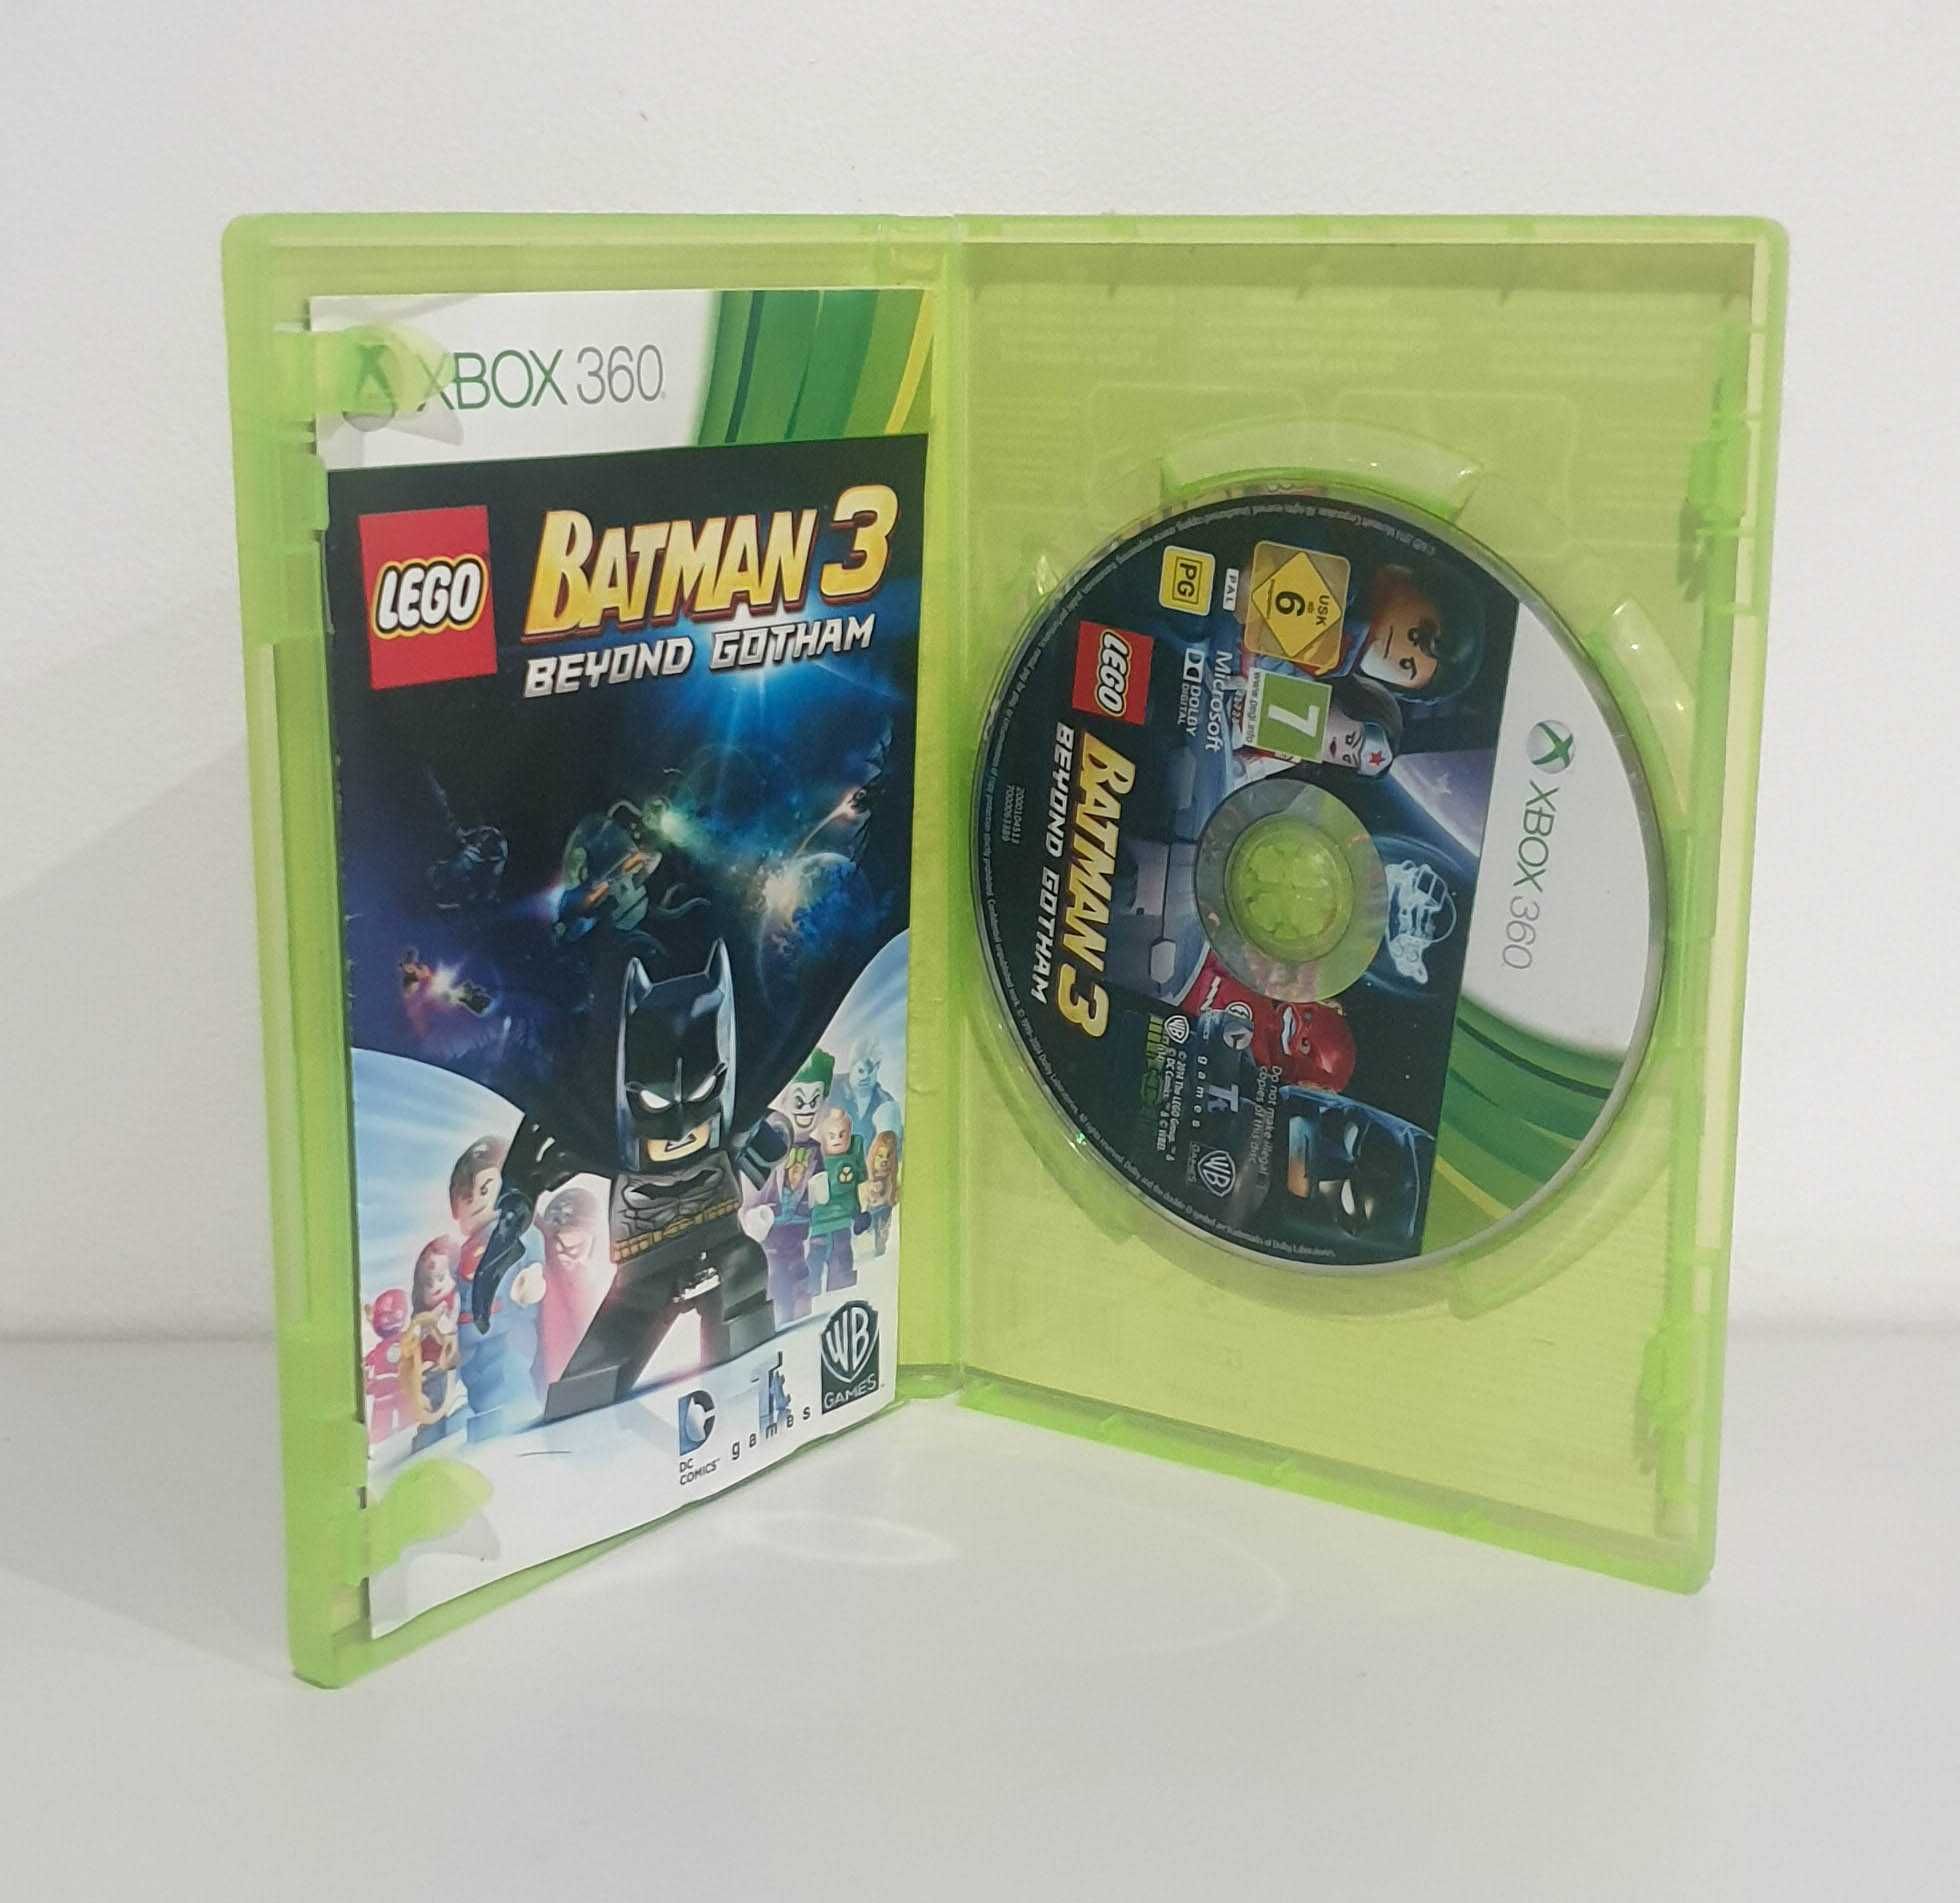 Gra LEGO Batman 3 BEYOND GOTHAM XBox 360 2xPL